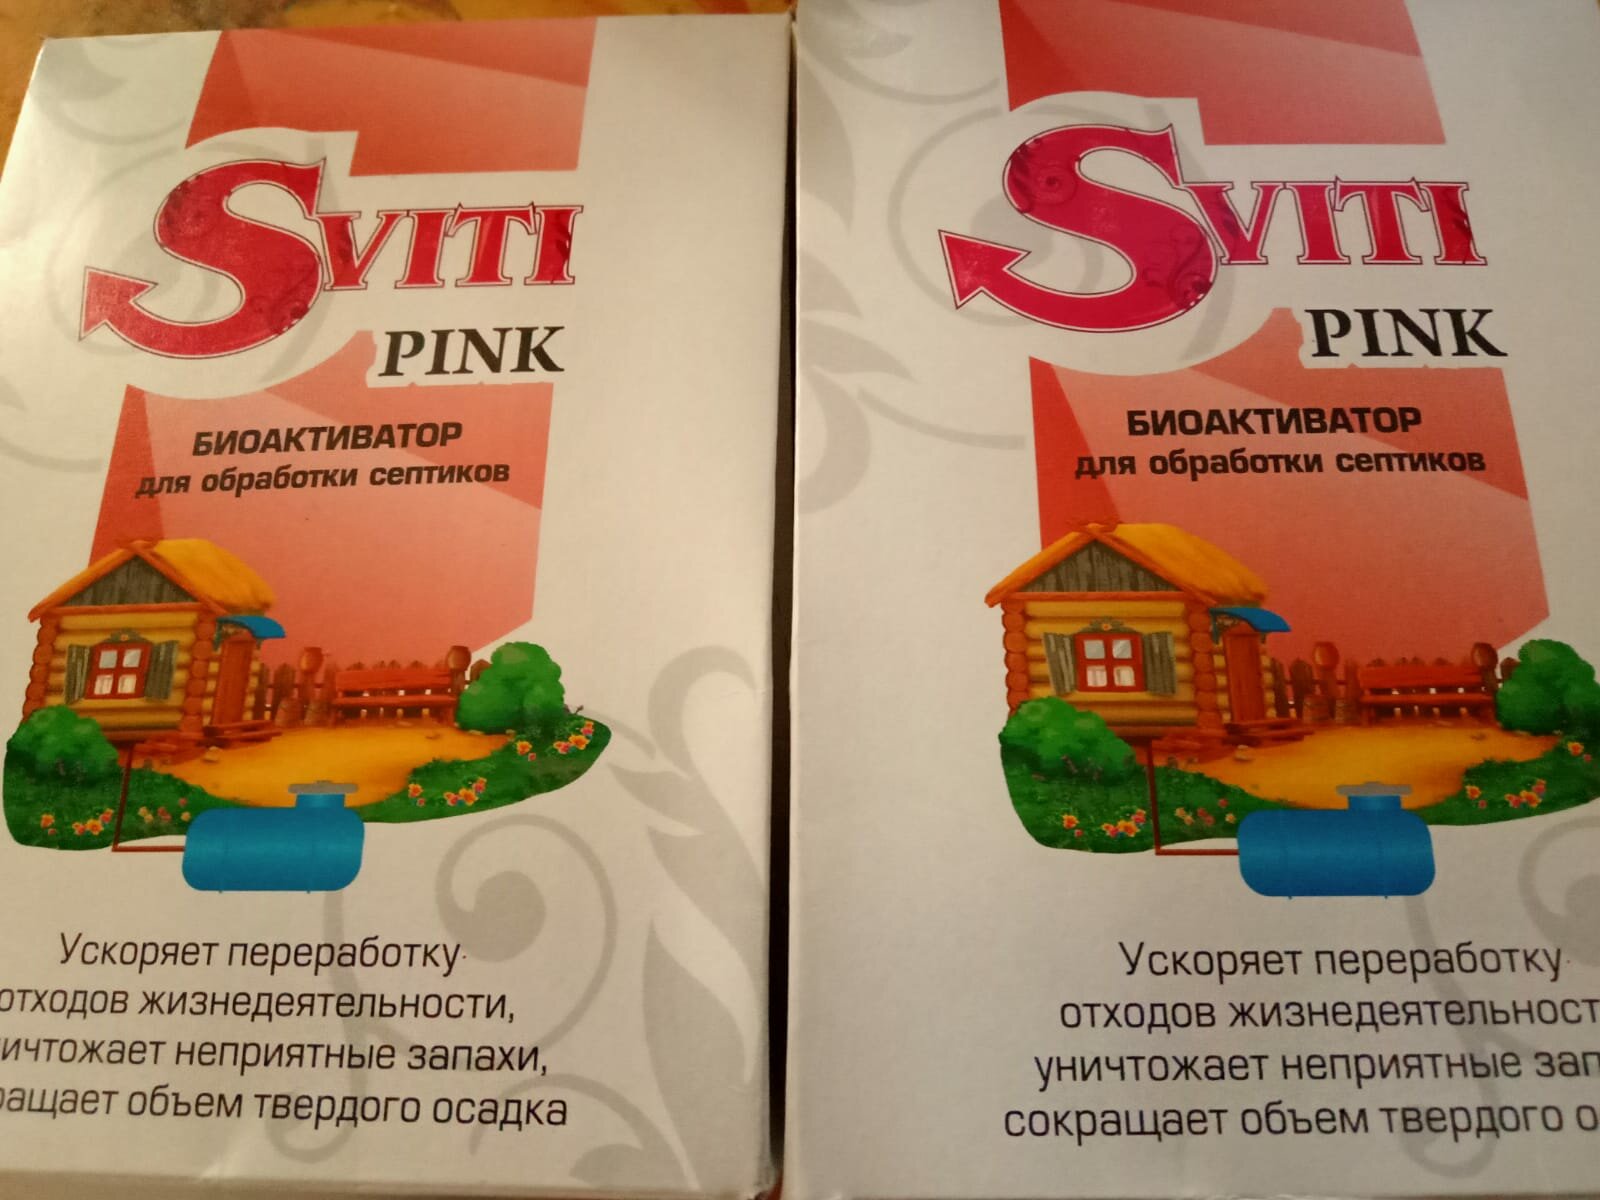 Средство Sviti Pink 2в1 биоактиватор био бактерии для чистки ямы септика - фотография № 12